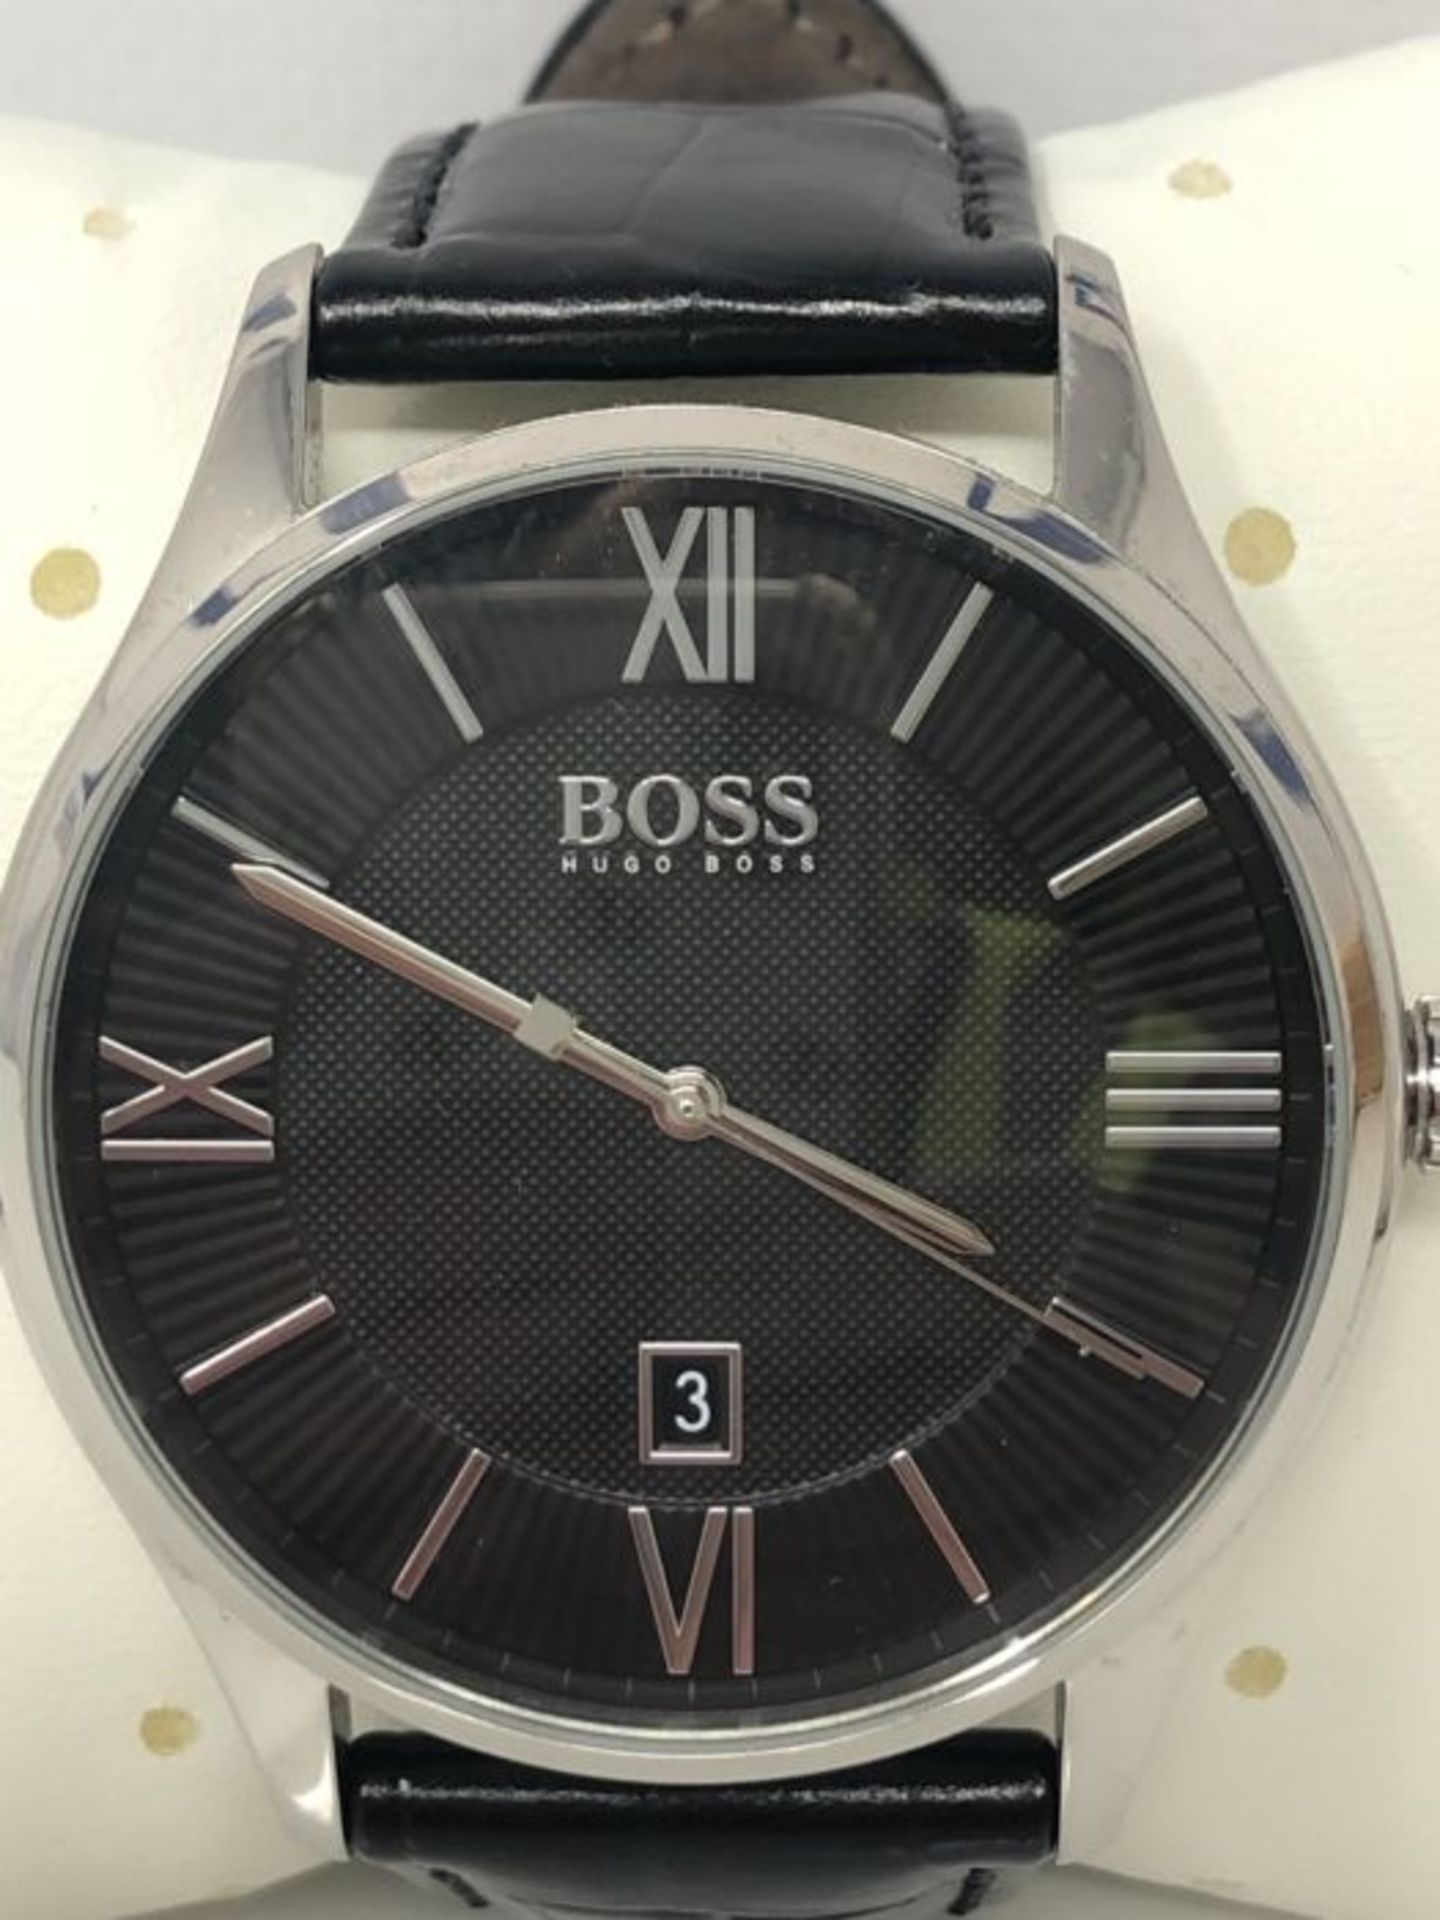 RRP £111.00 BOSS Herren Analog Quarz Uhr mit Leder Armband 1513485 - Image 3 of 3